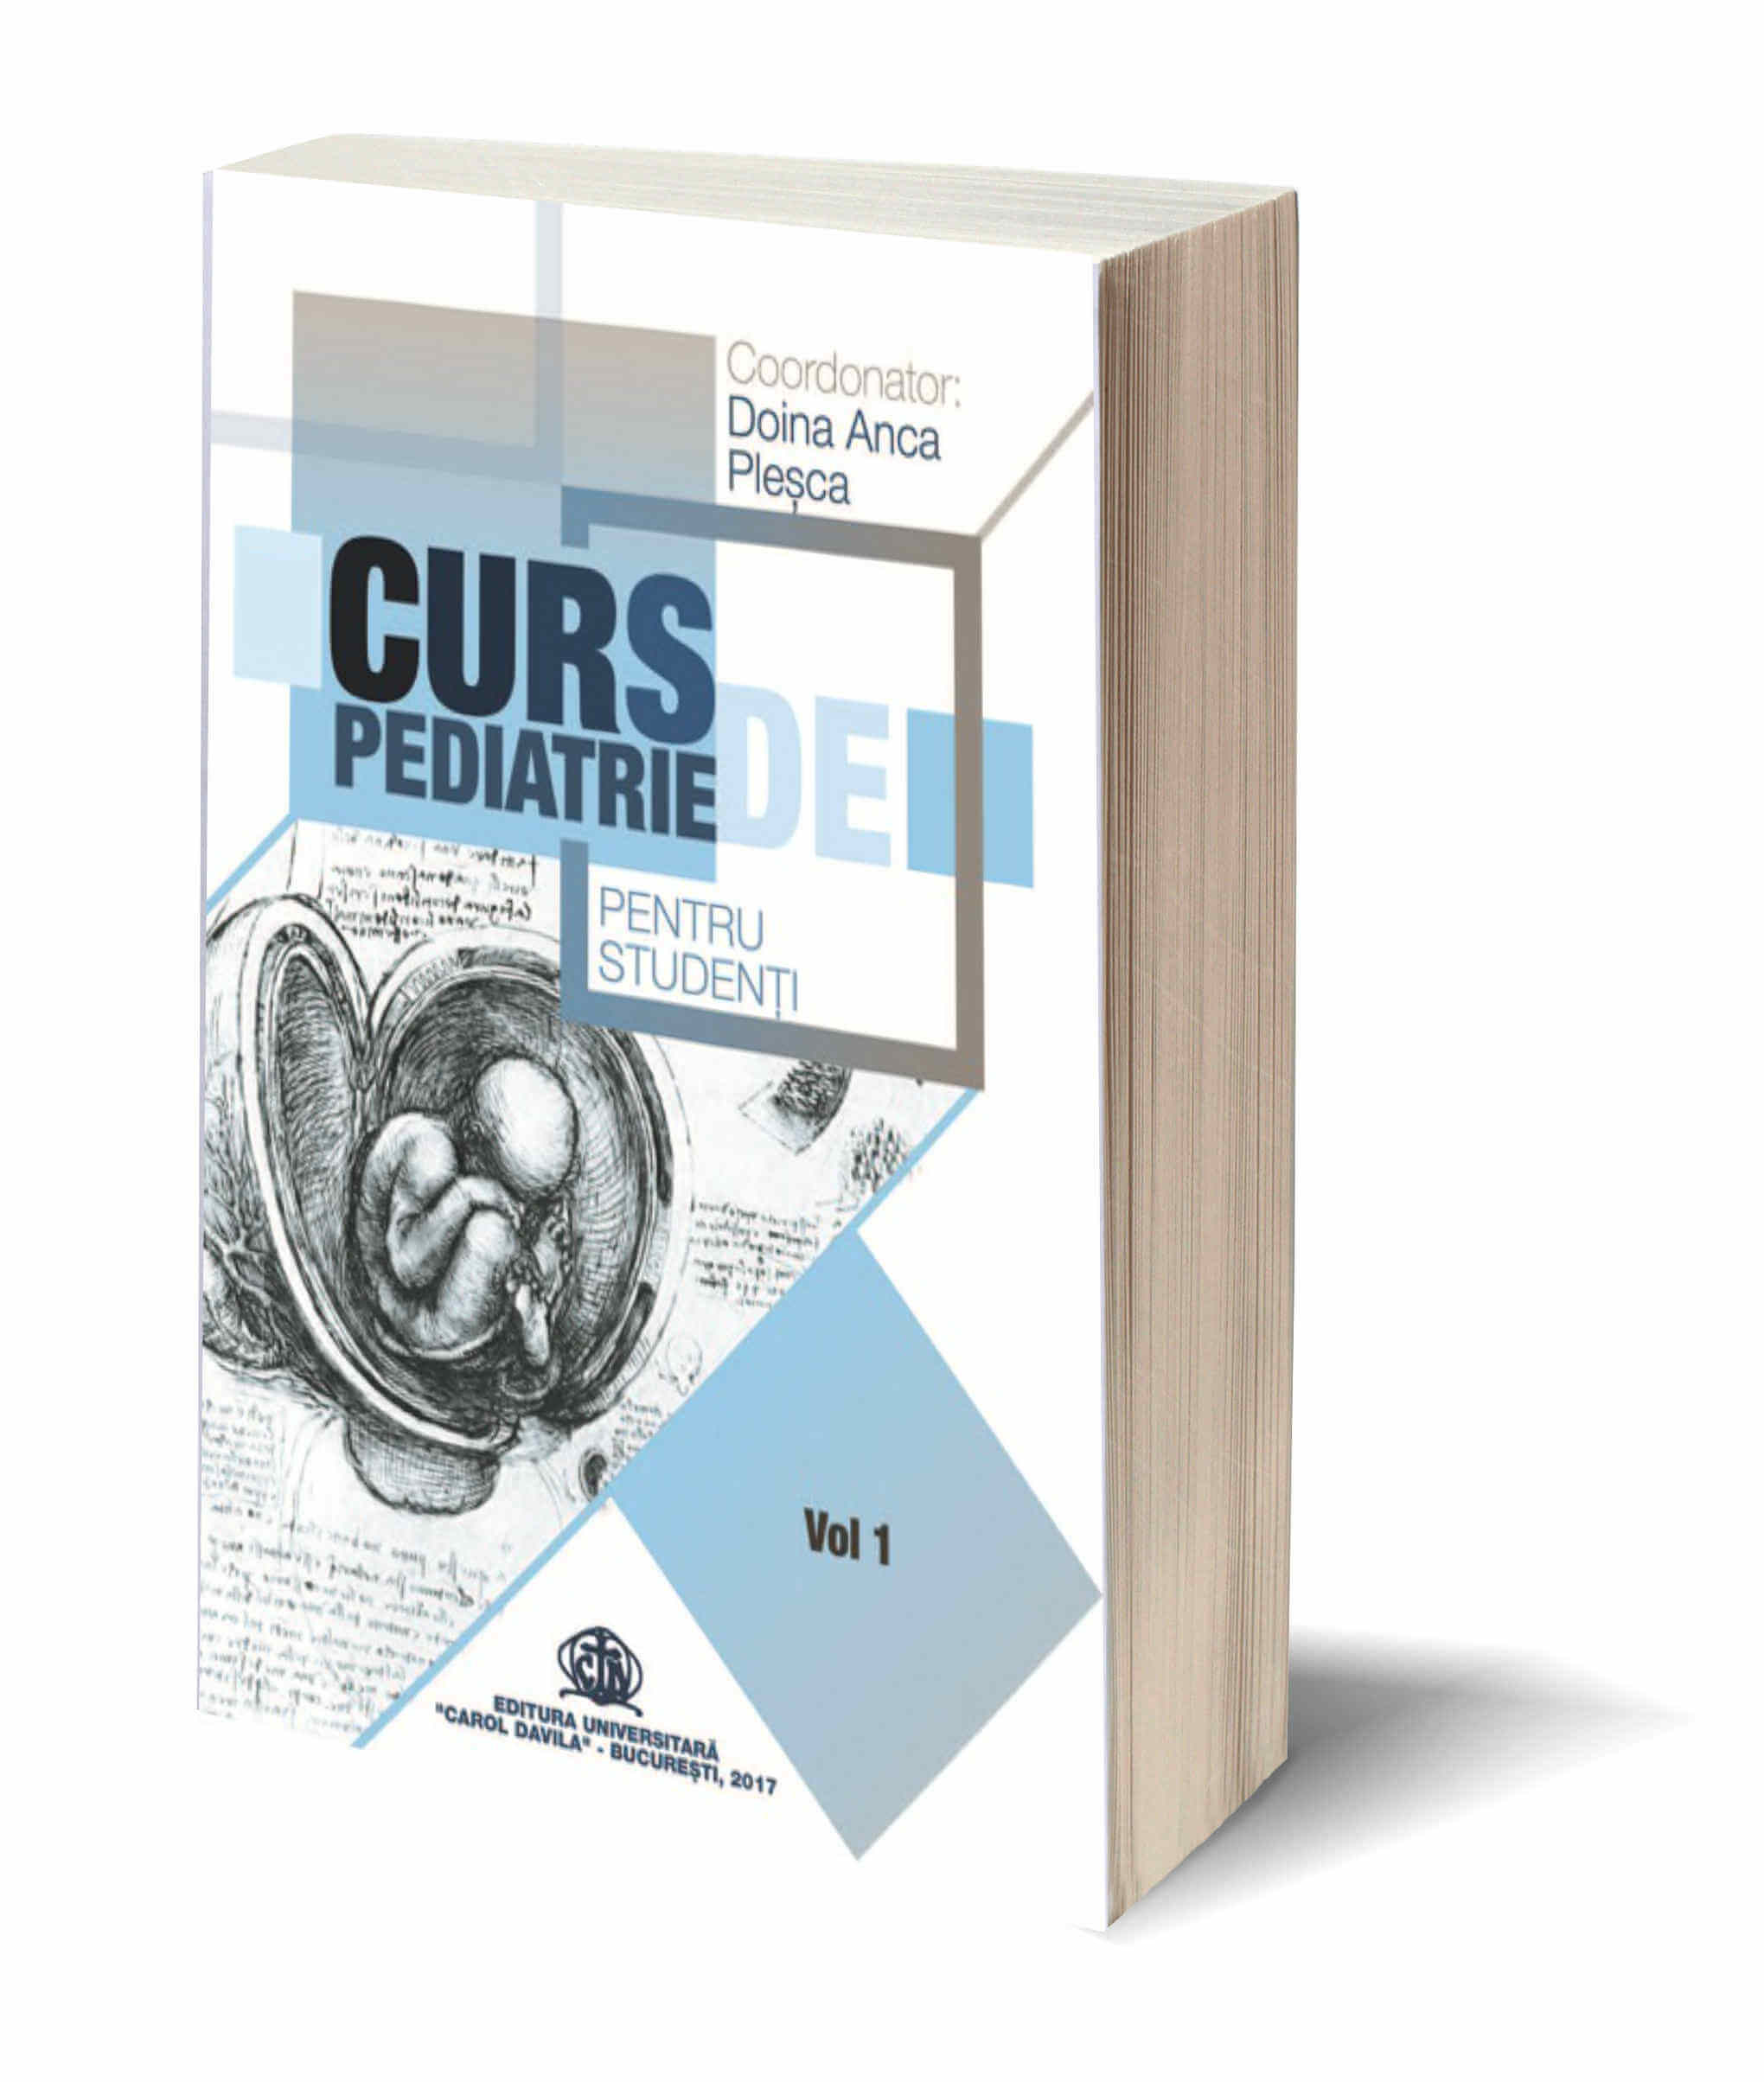 Curs de Pediatrie pentru studenti Vol. 1